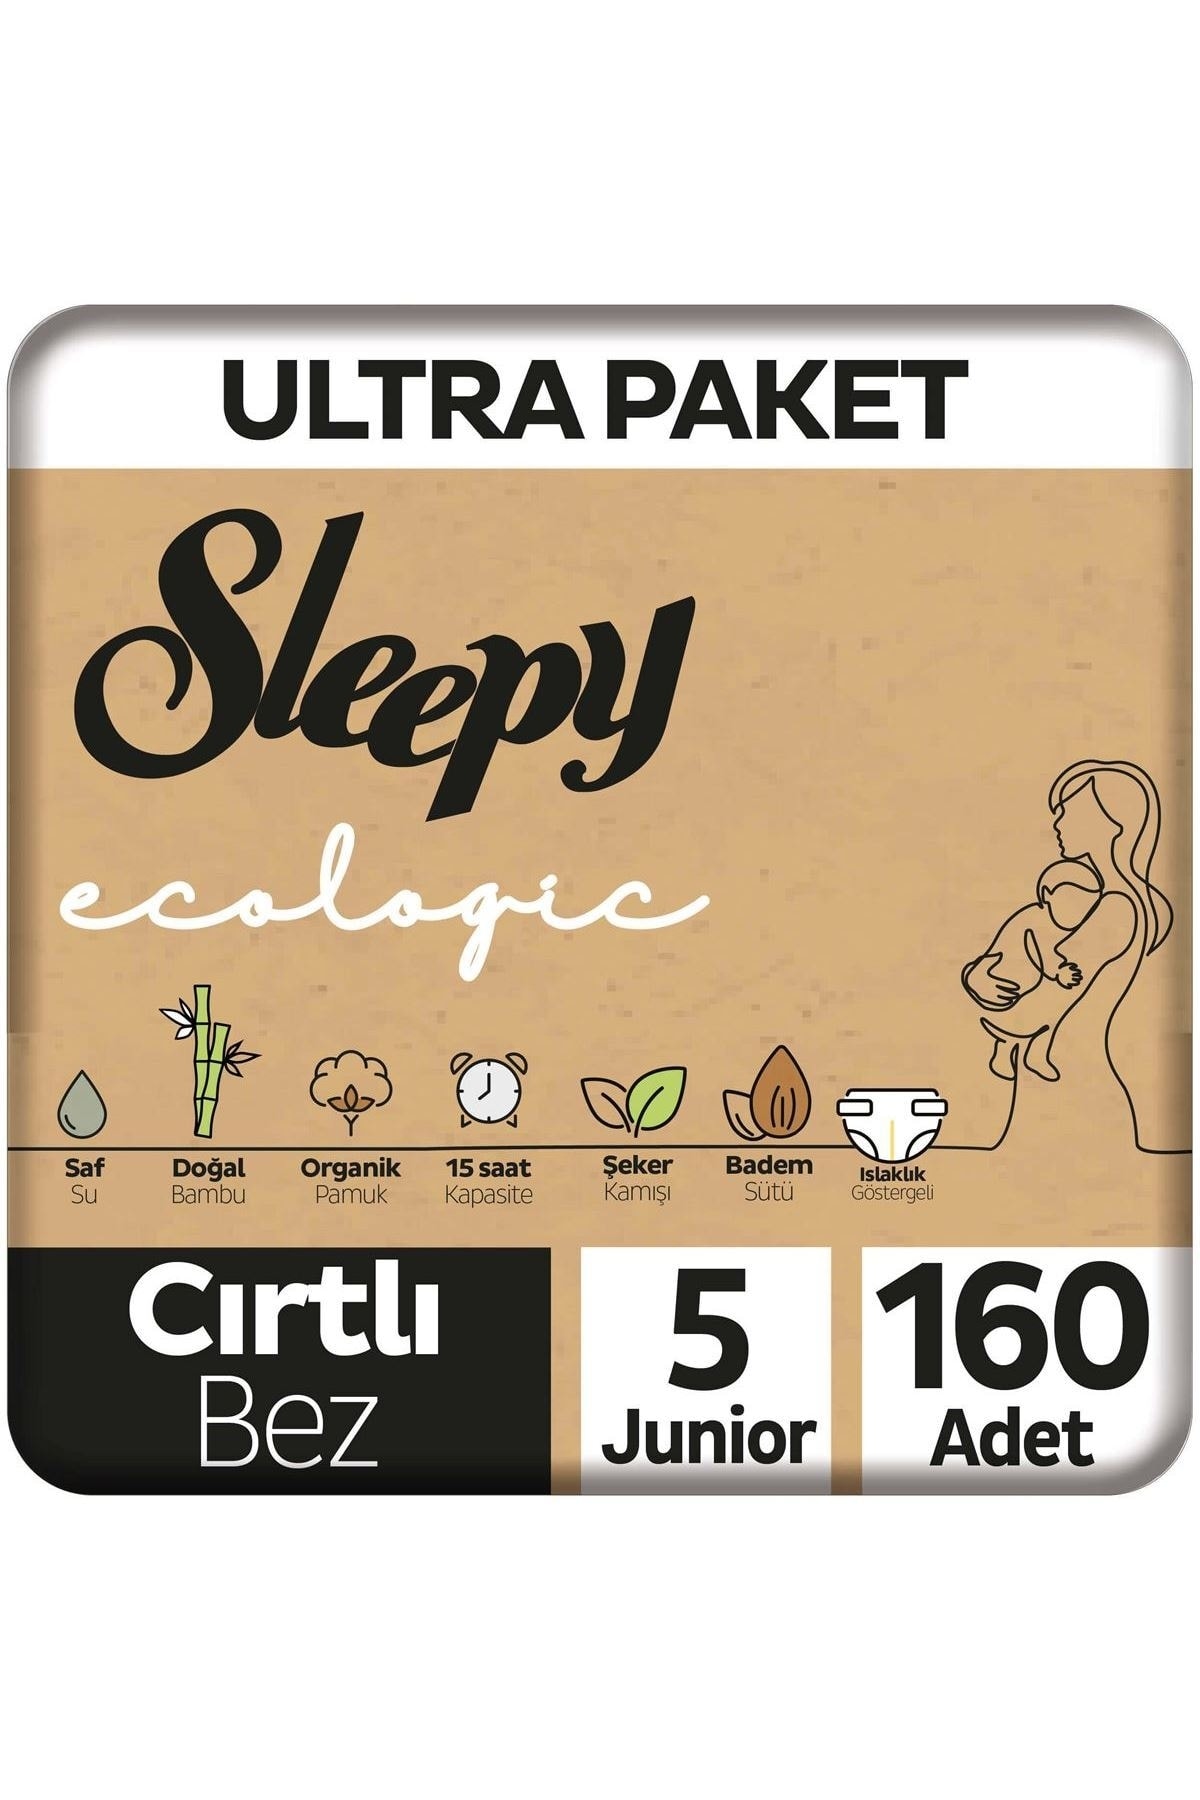 Sleepy Ecologic Ultra Paket Bebek Bezi 5 Numara Junior 160 Adet